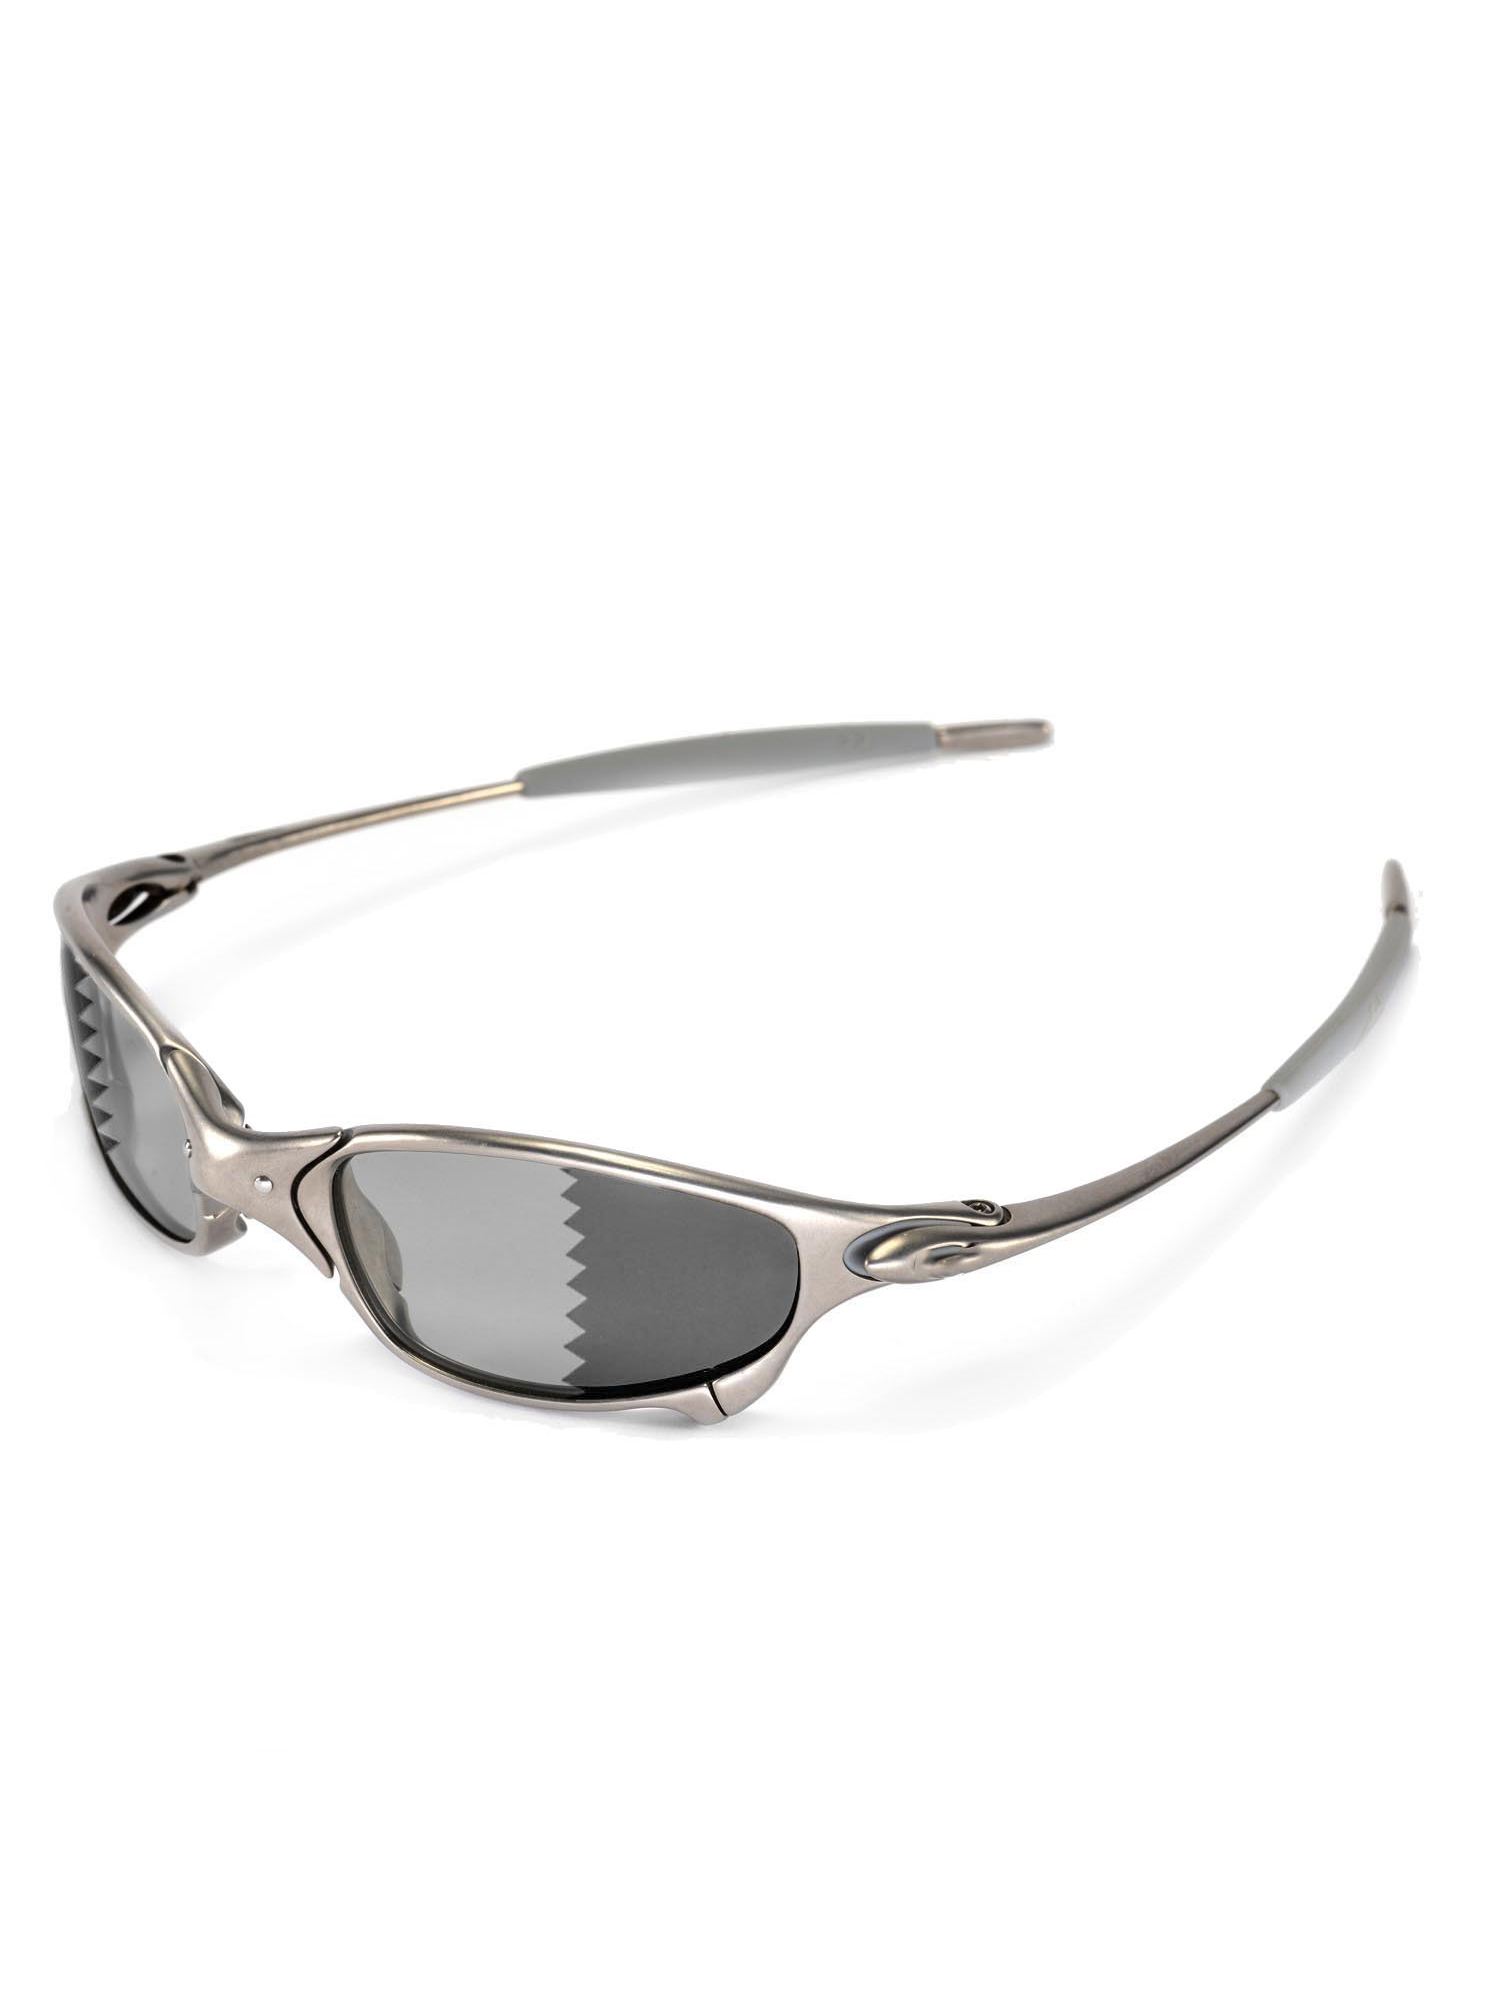 Walleva Transition/Photochromic Polarized Replacement Lenses for Oakley  Juliet Sunglasses 